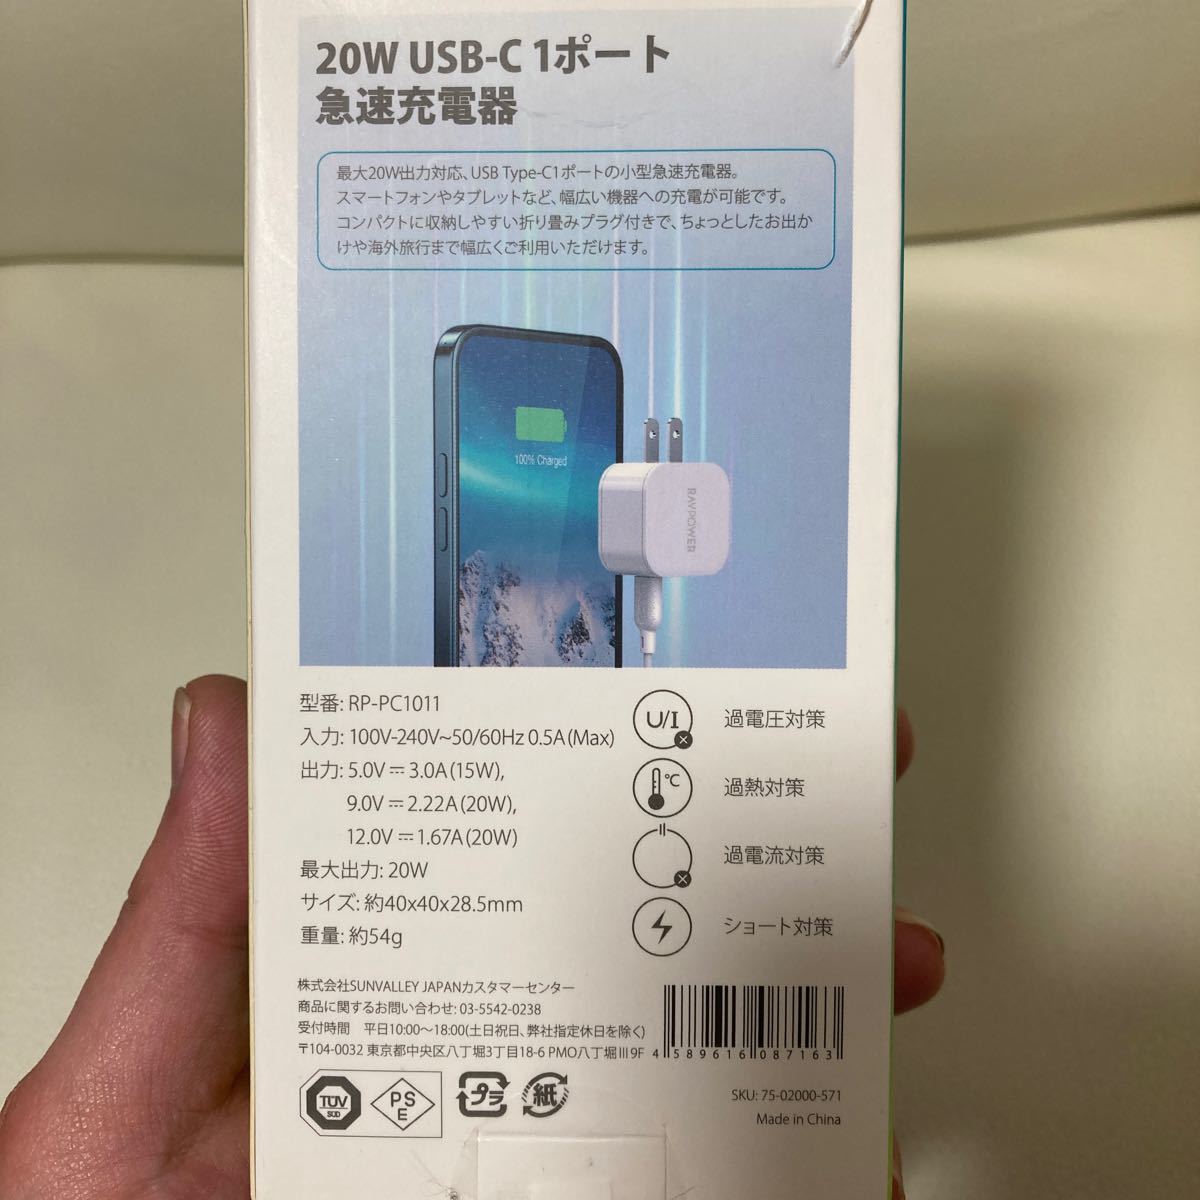 iPhone、Android対応 20W USB-C 1ポート急速充電器